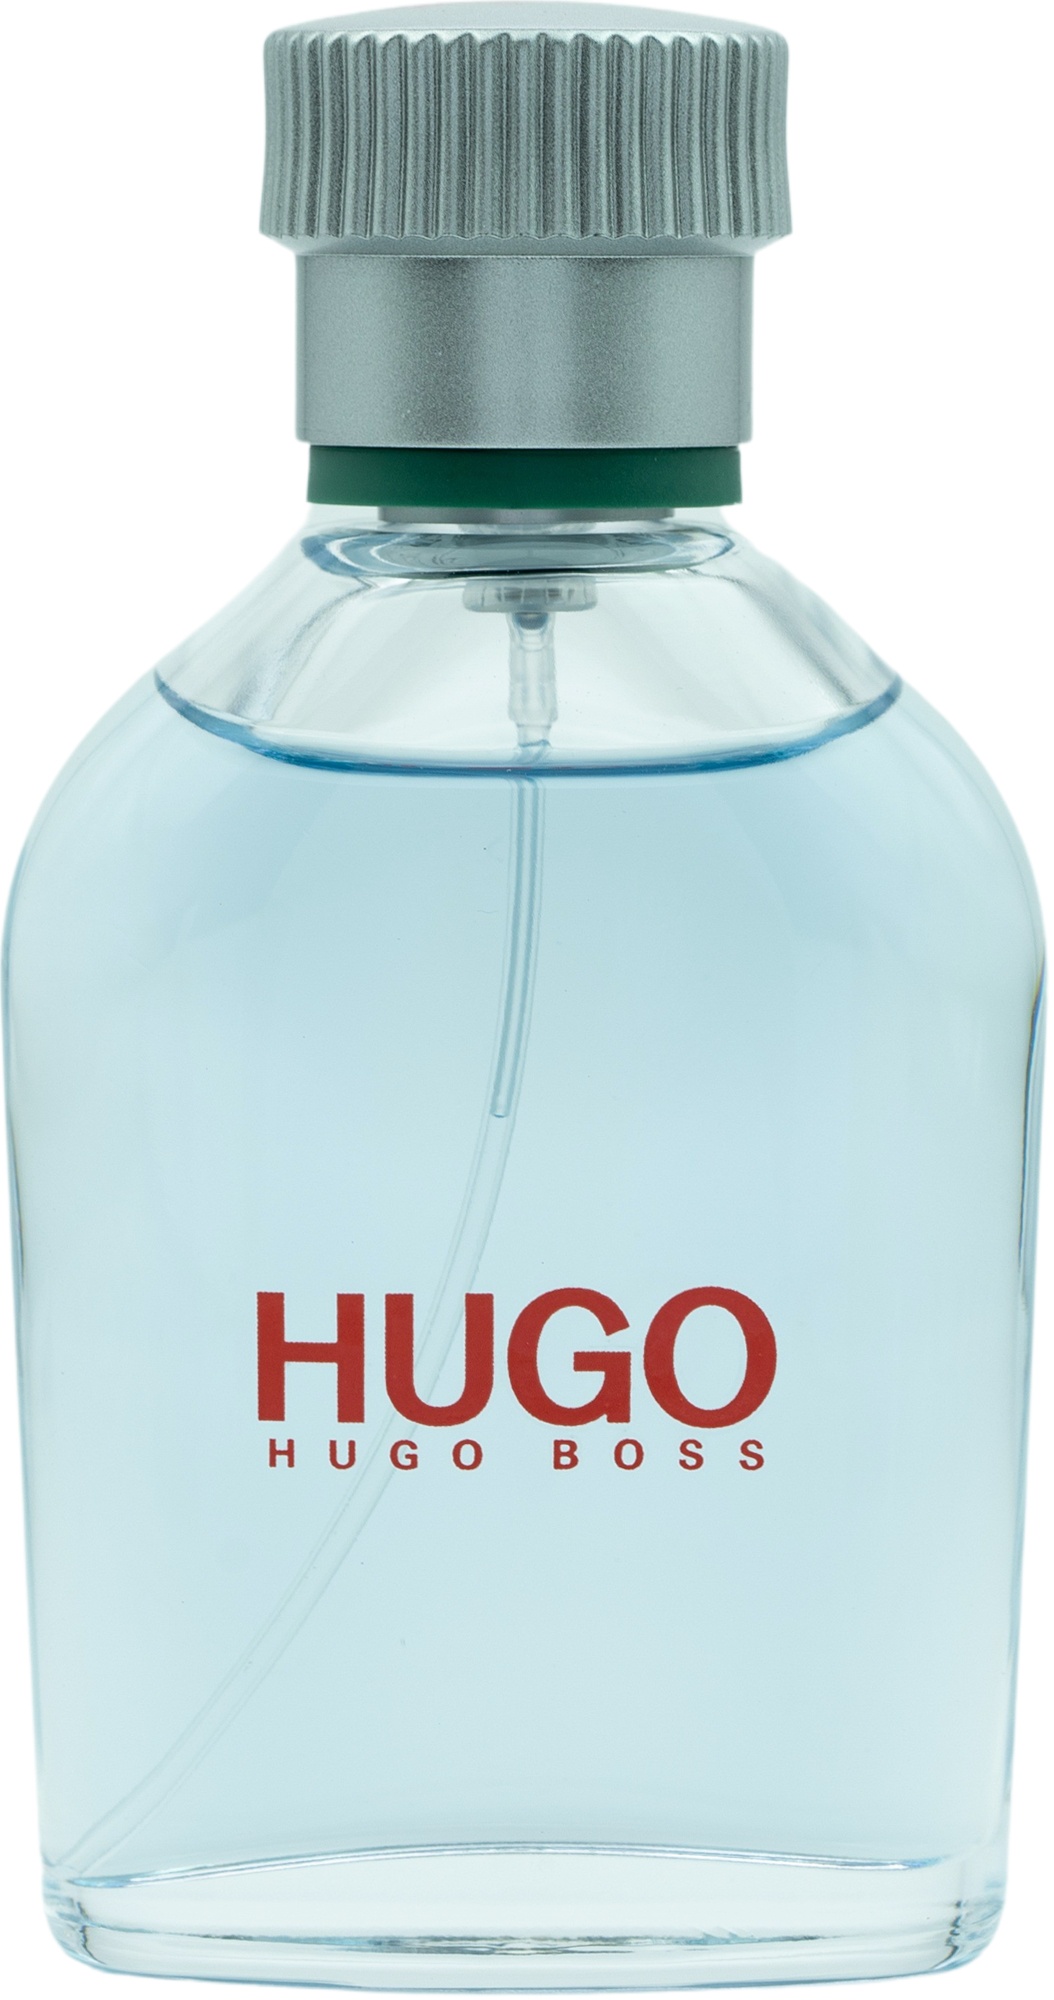 hugo boss eau de toilette 200ml